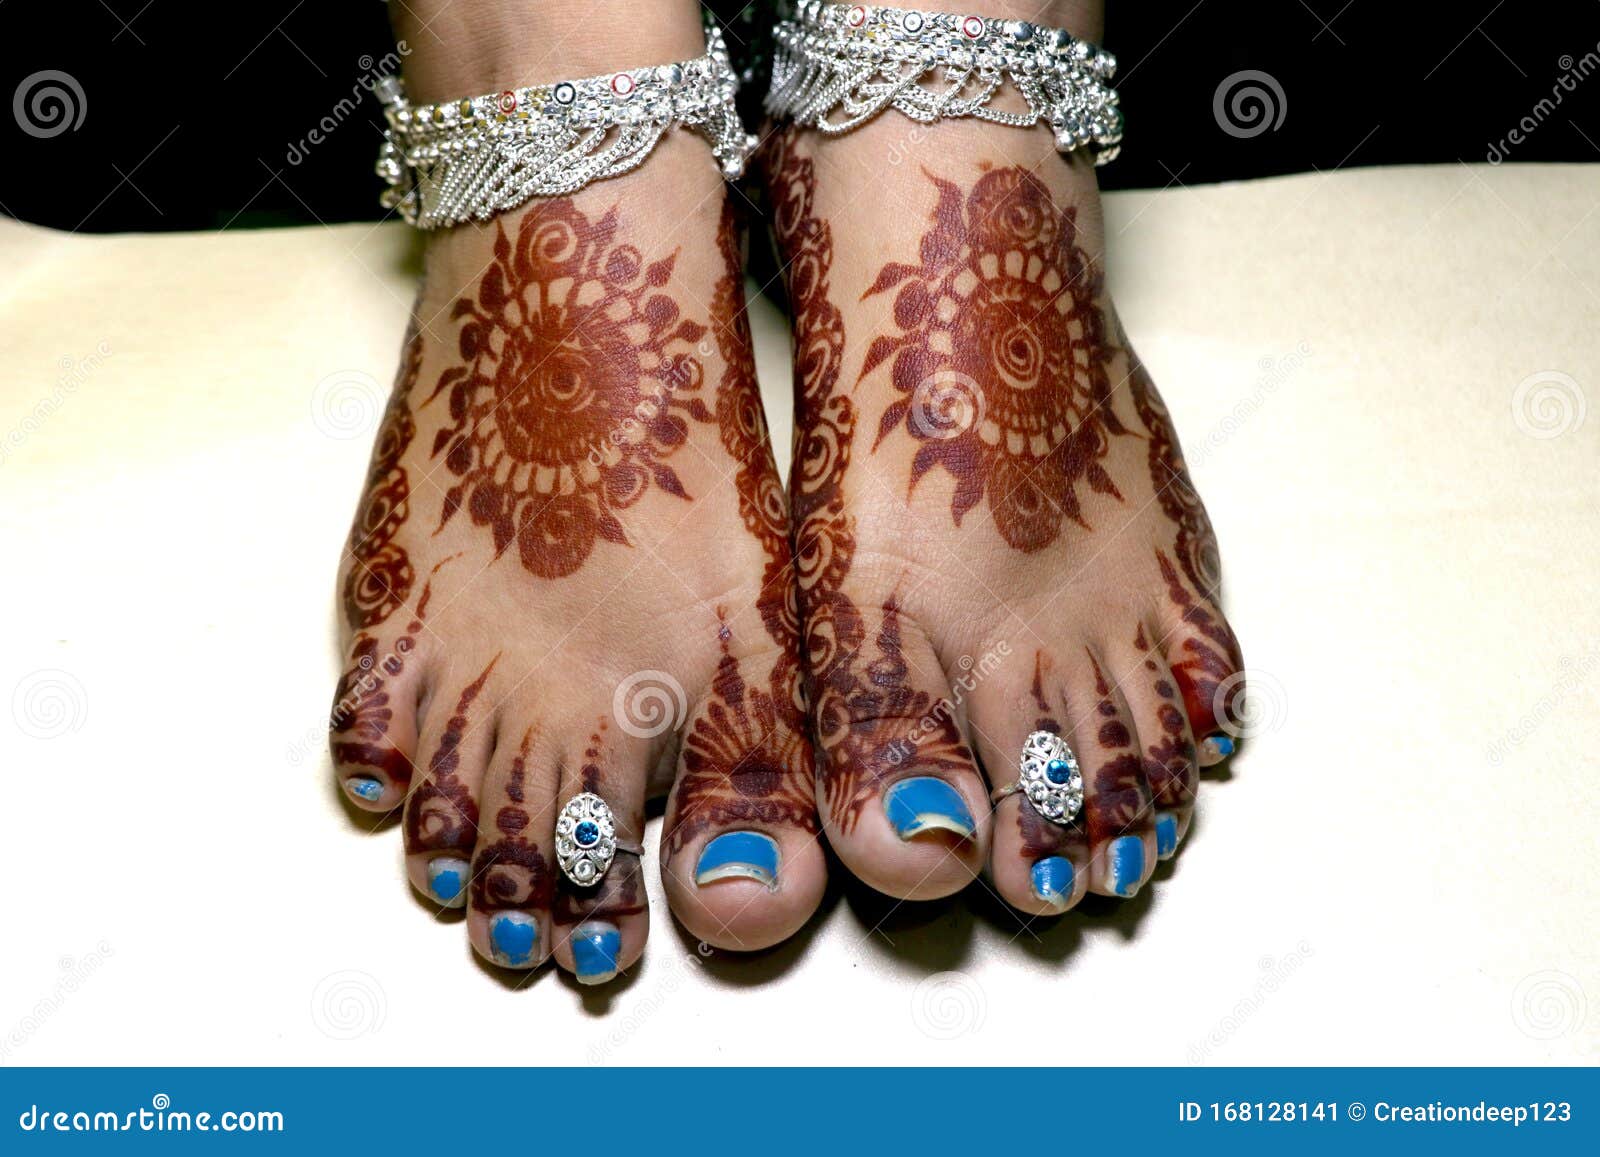 New Indian Bridal Leg with Mehandi Design Stock Image - Image of ...